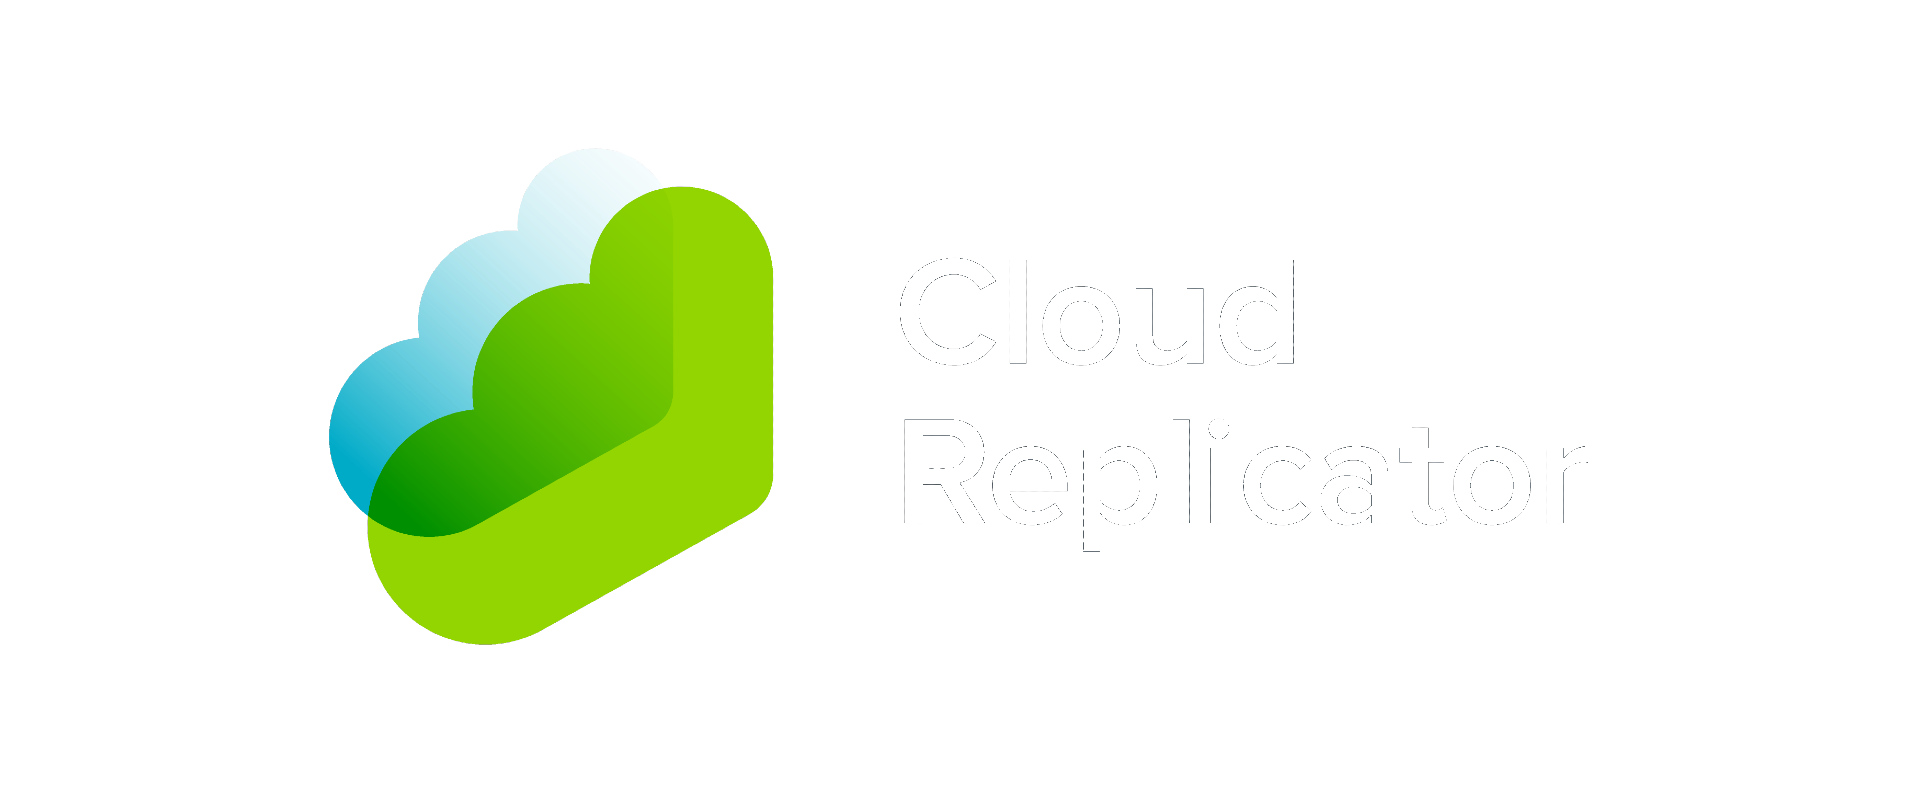 cloud replicator app by EFOQUS